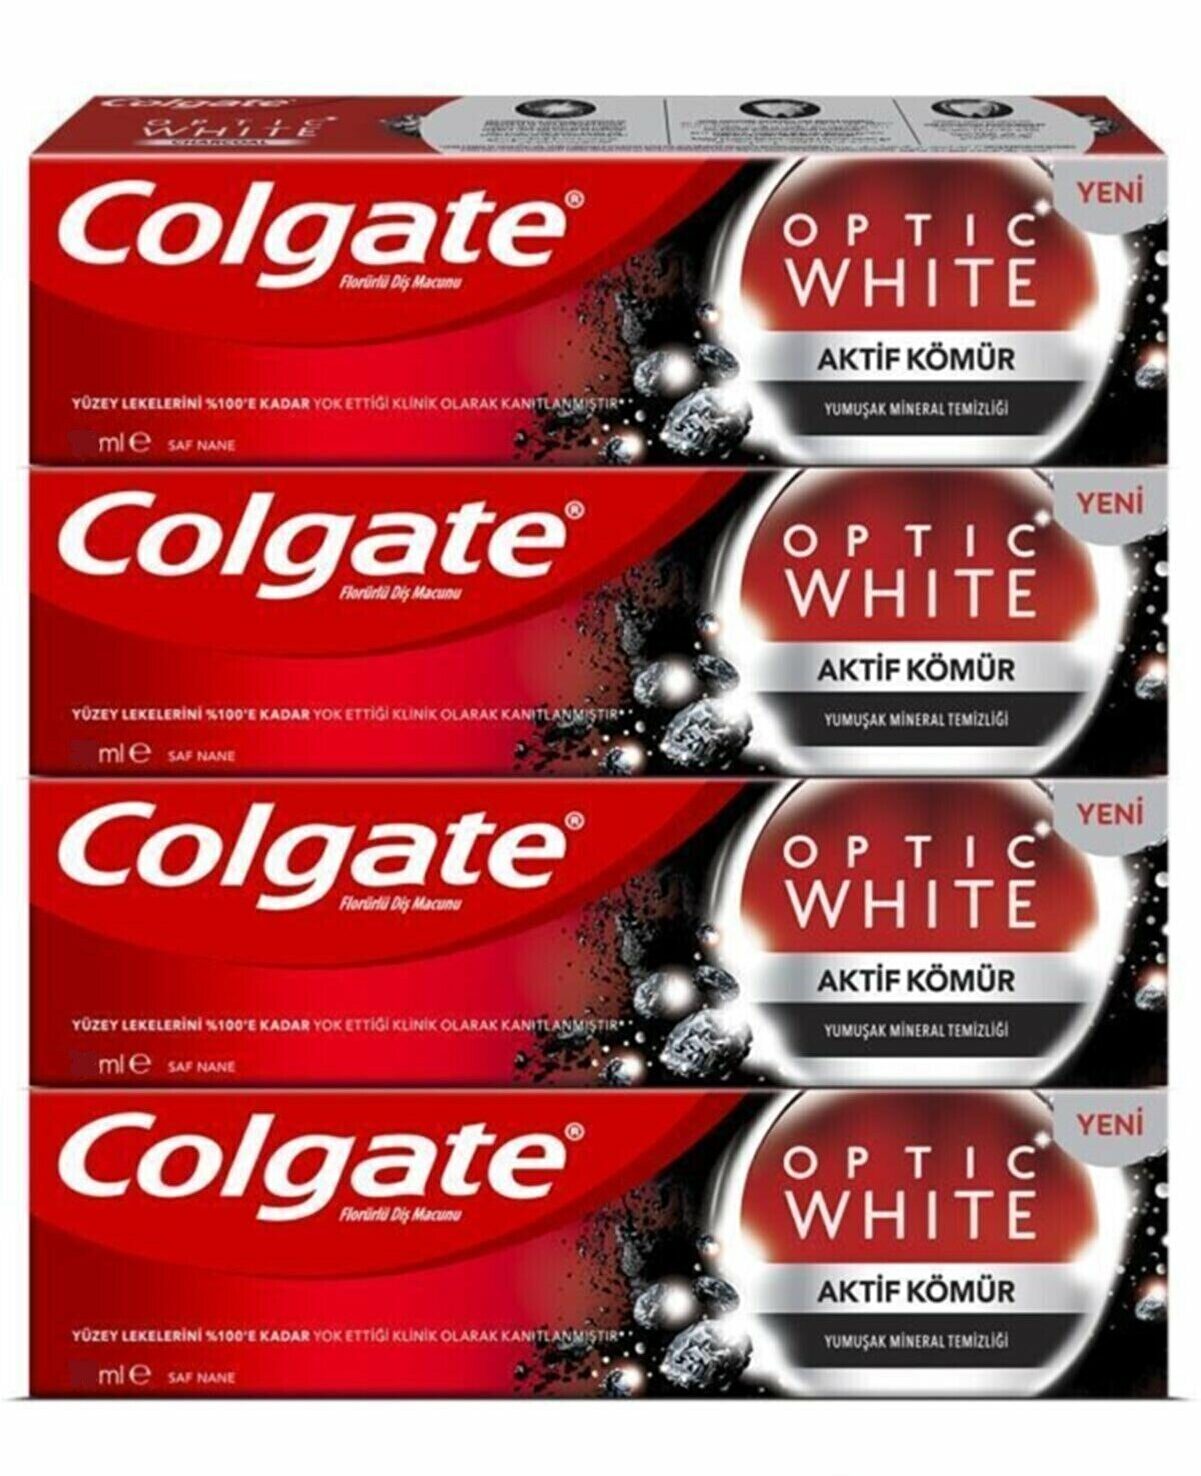 colgate optic white 美白コルゲート オプテックホワイト 2本